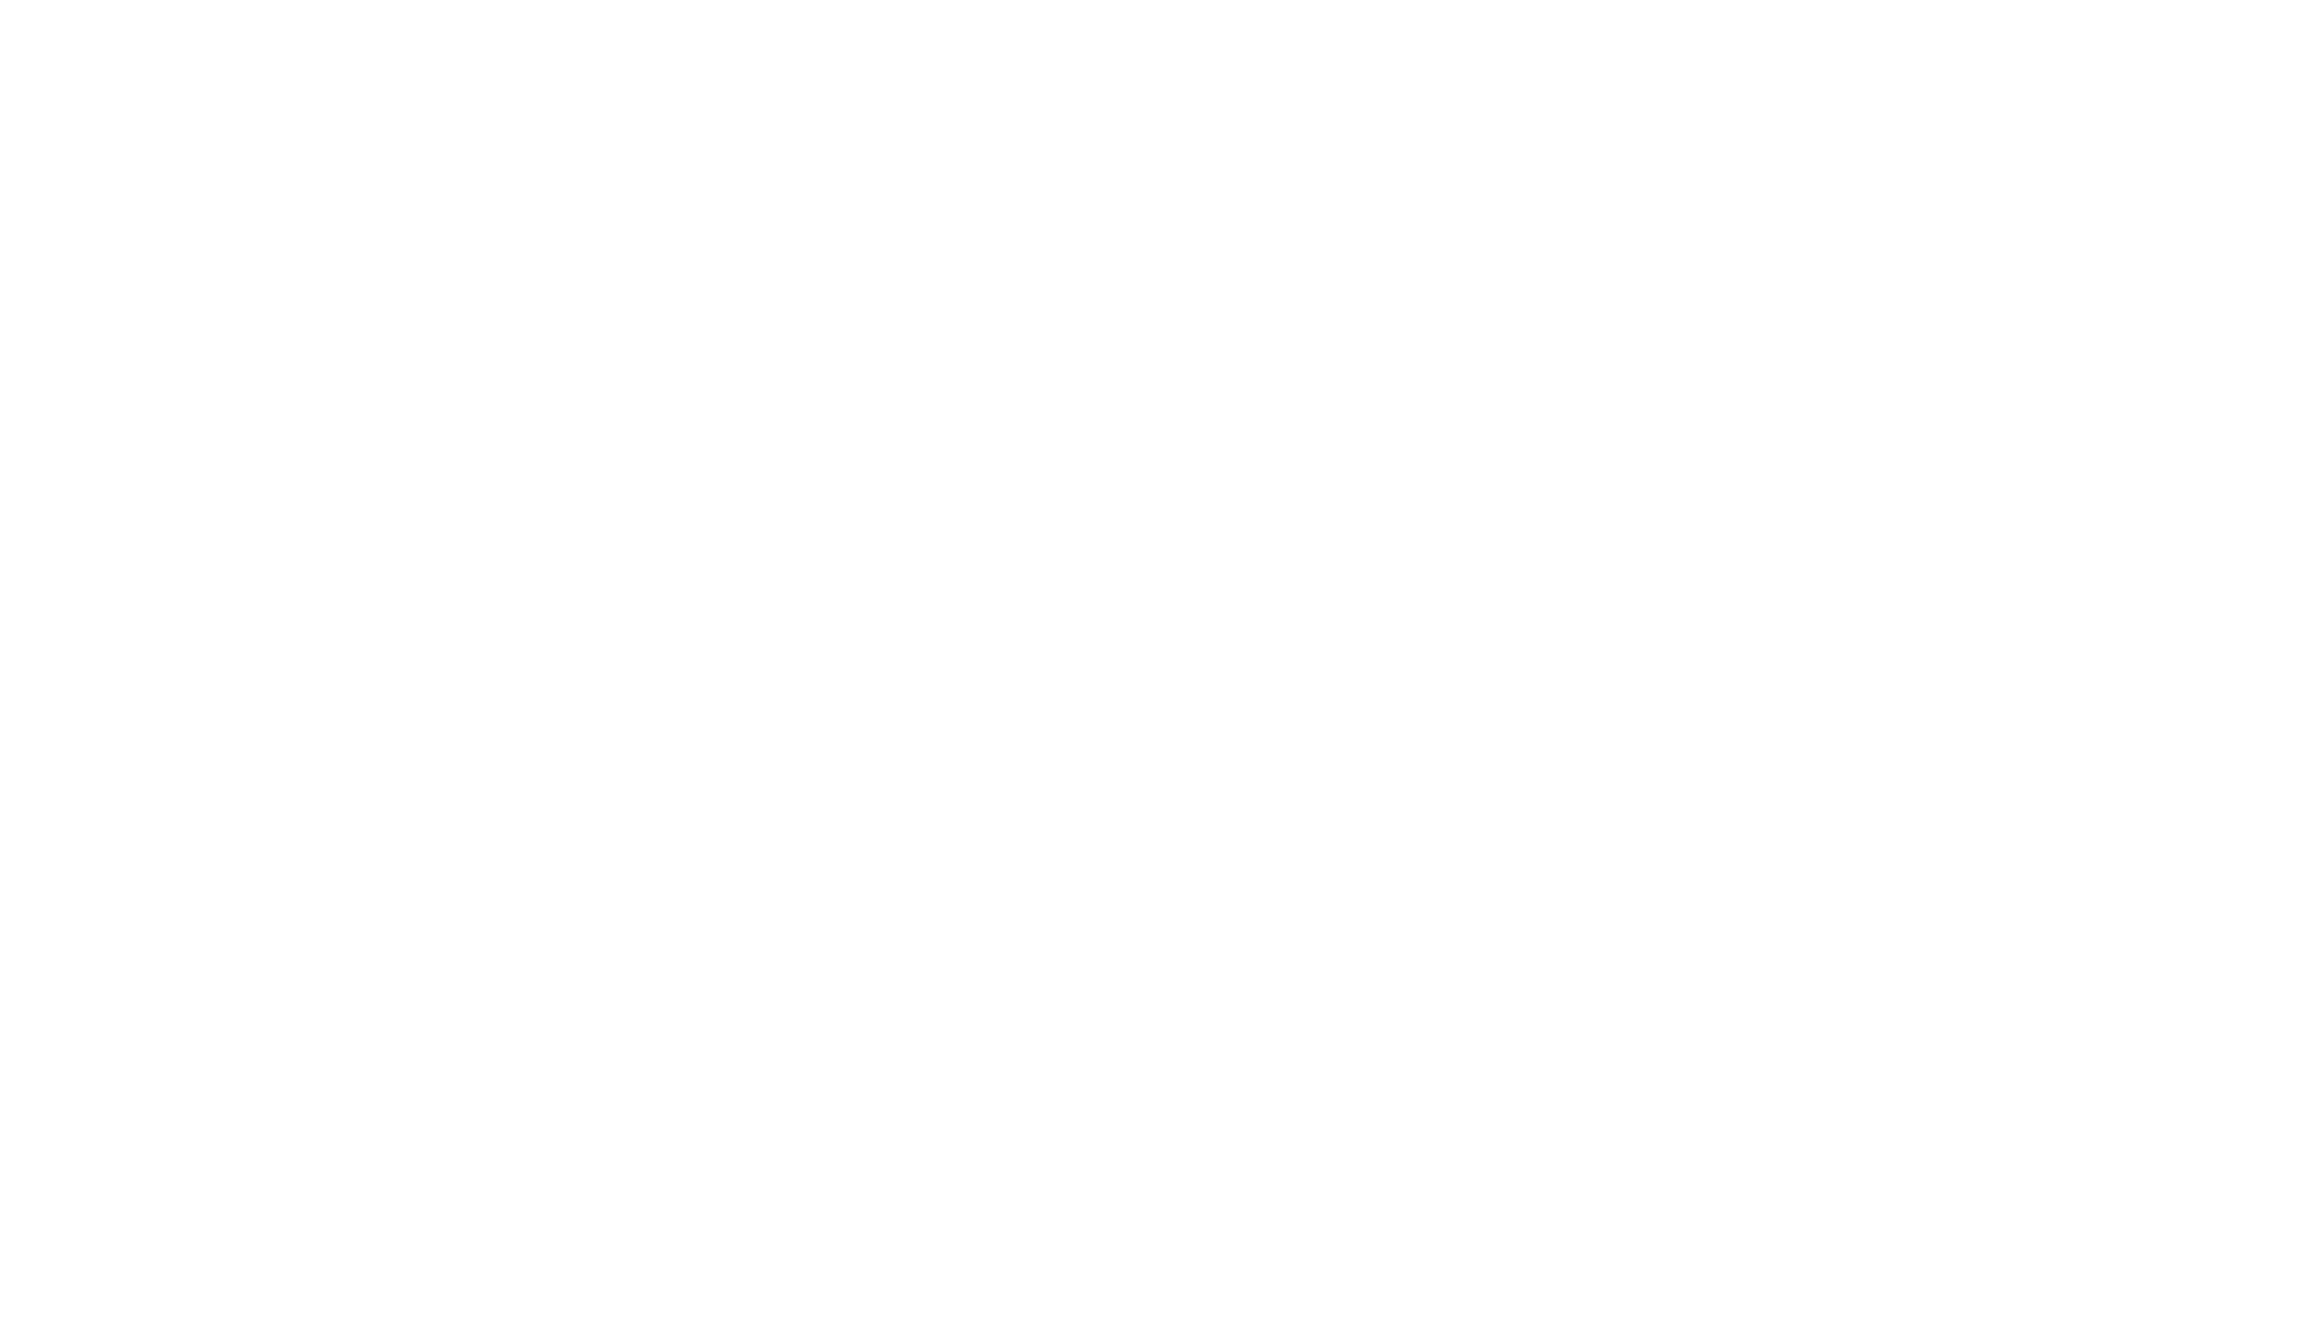 Give Soul